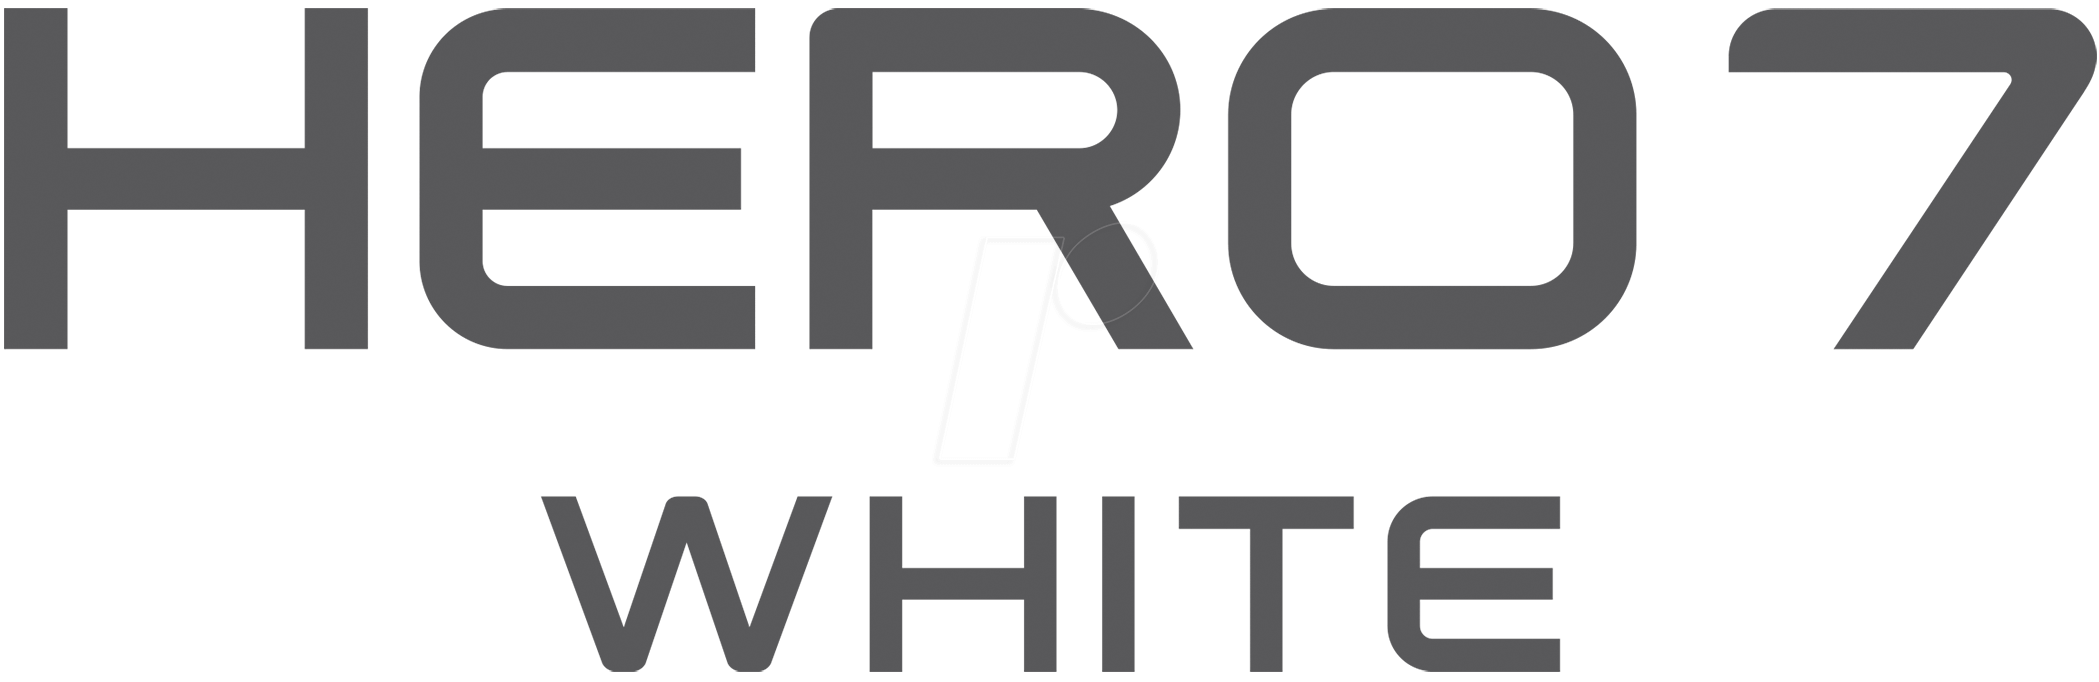 White GoPro Logo - GOPRO HERO7 WS: Action Cam, GoPro Hero7 White at reichelt elektronik